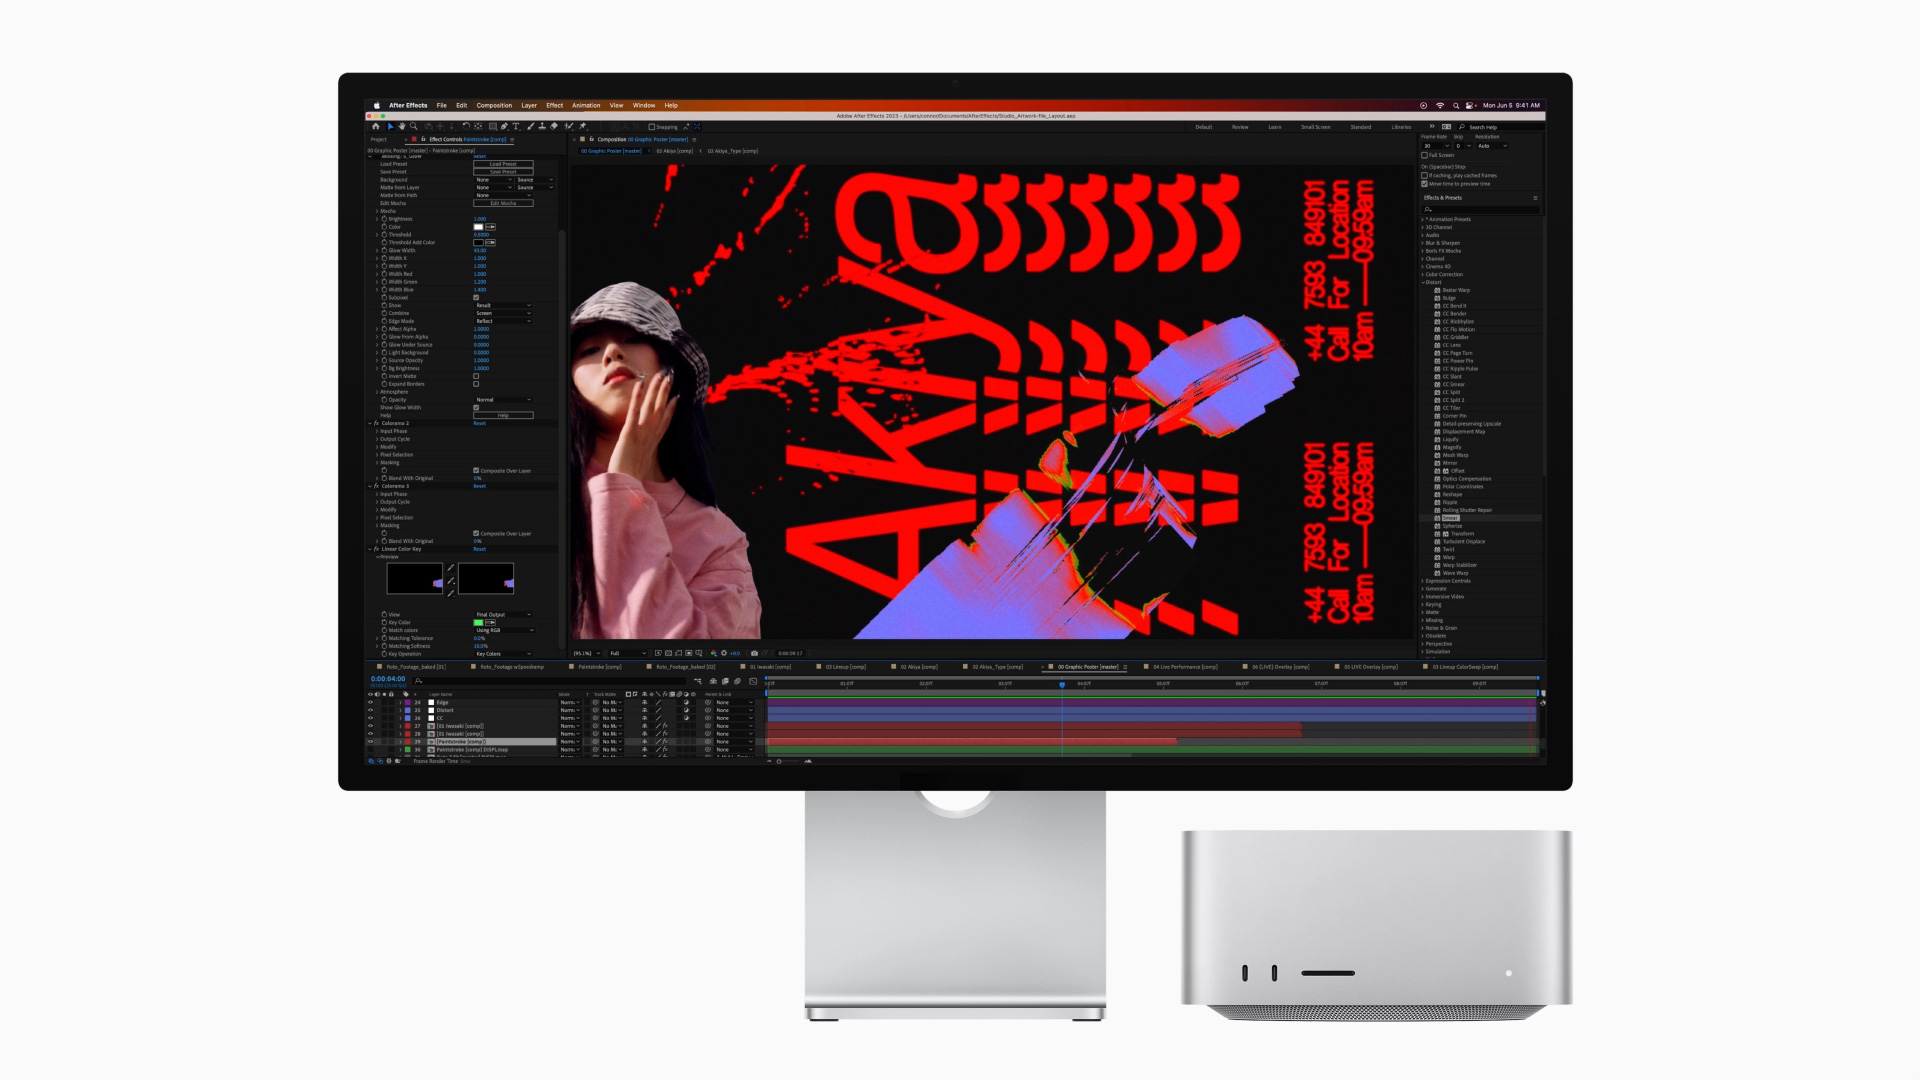 Mac Studio at Costco is now $1250 YMMV. : r/MacStudio